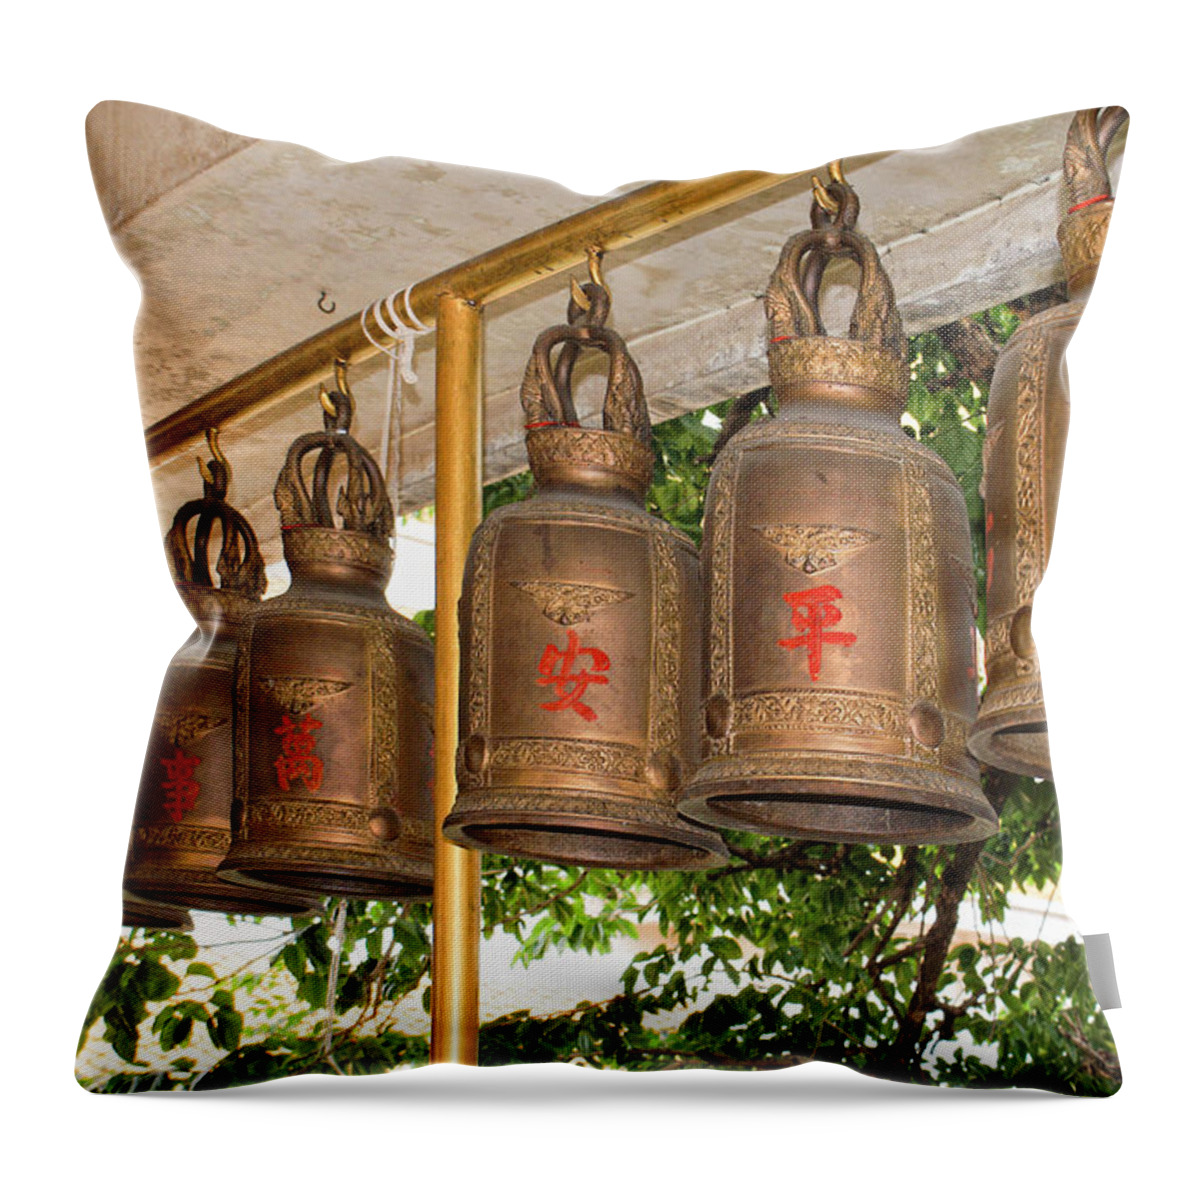 Bangkok Throw Pillow featuring the digital art Bells by Carol Ailles